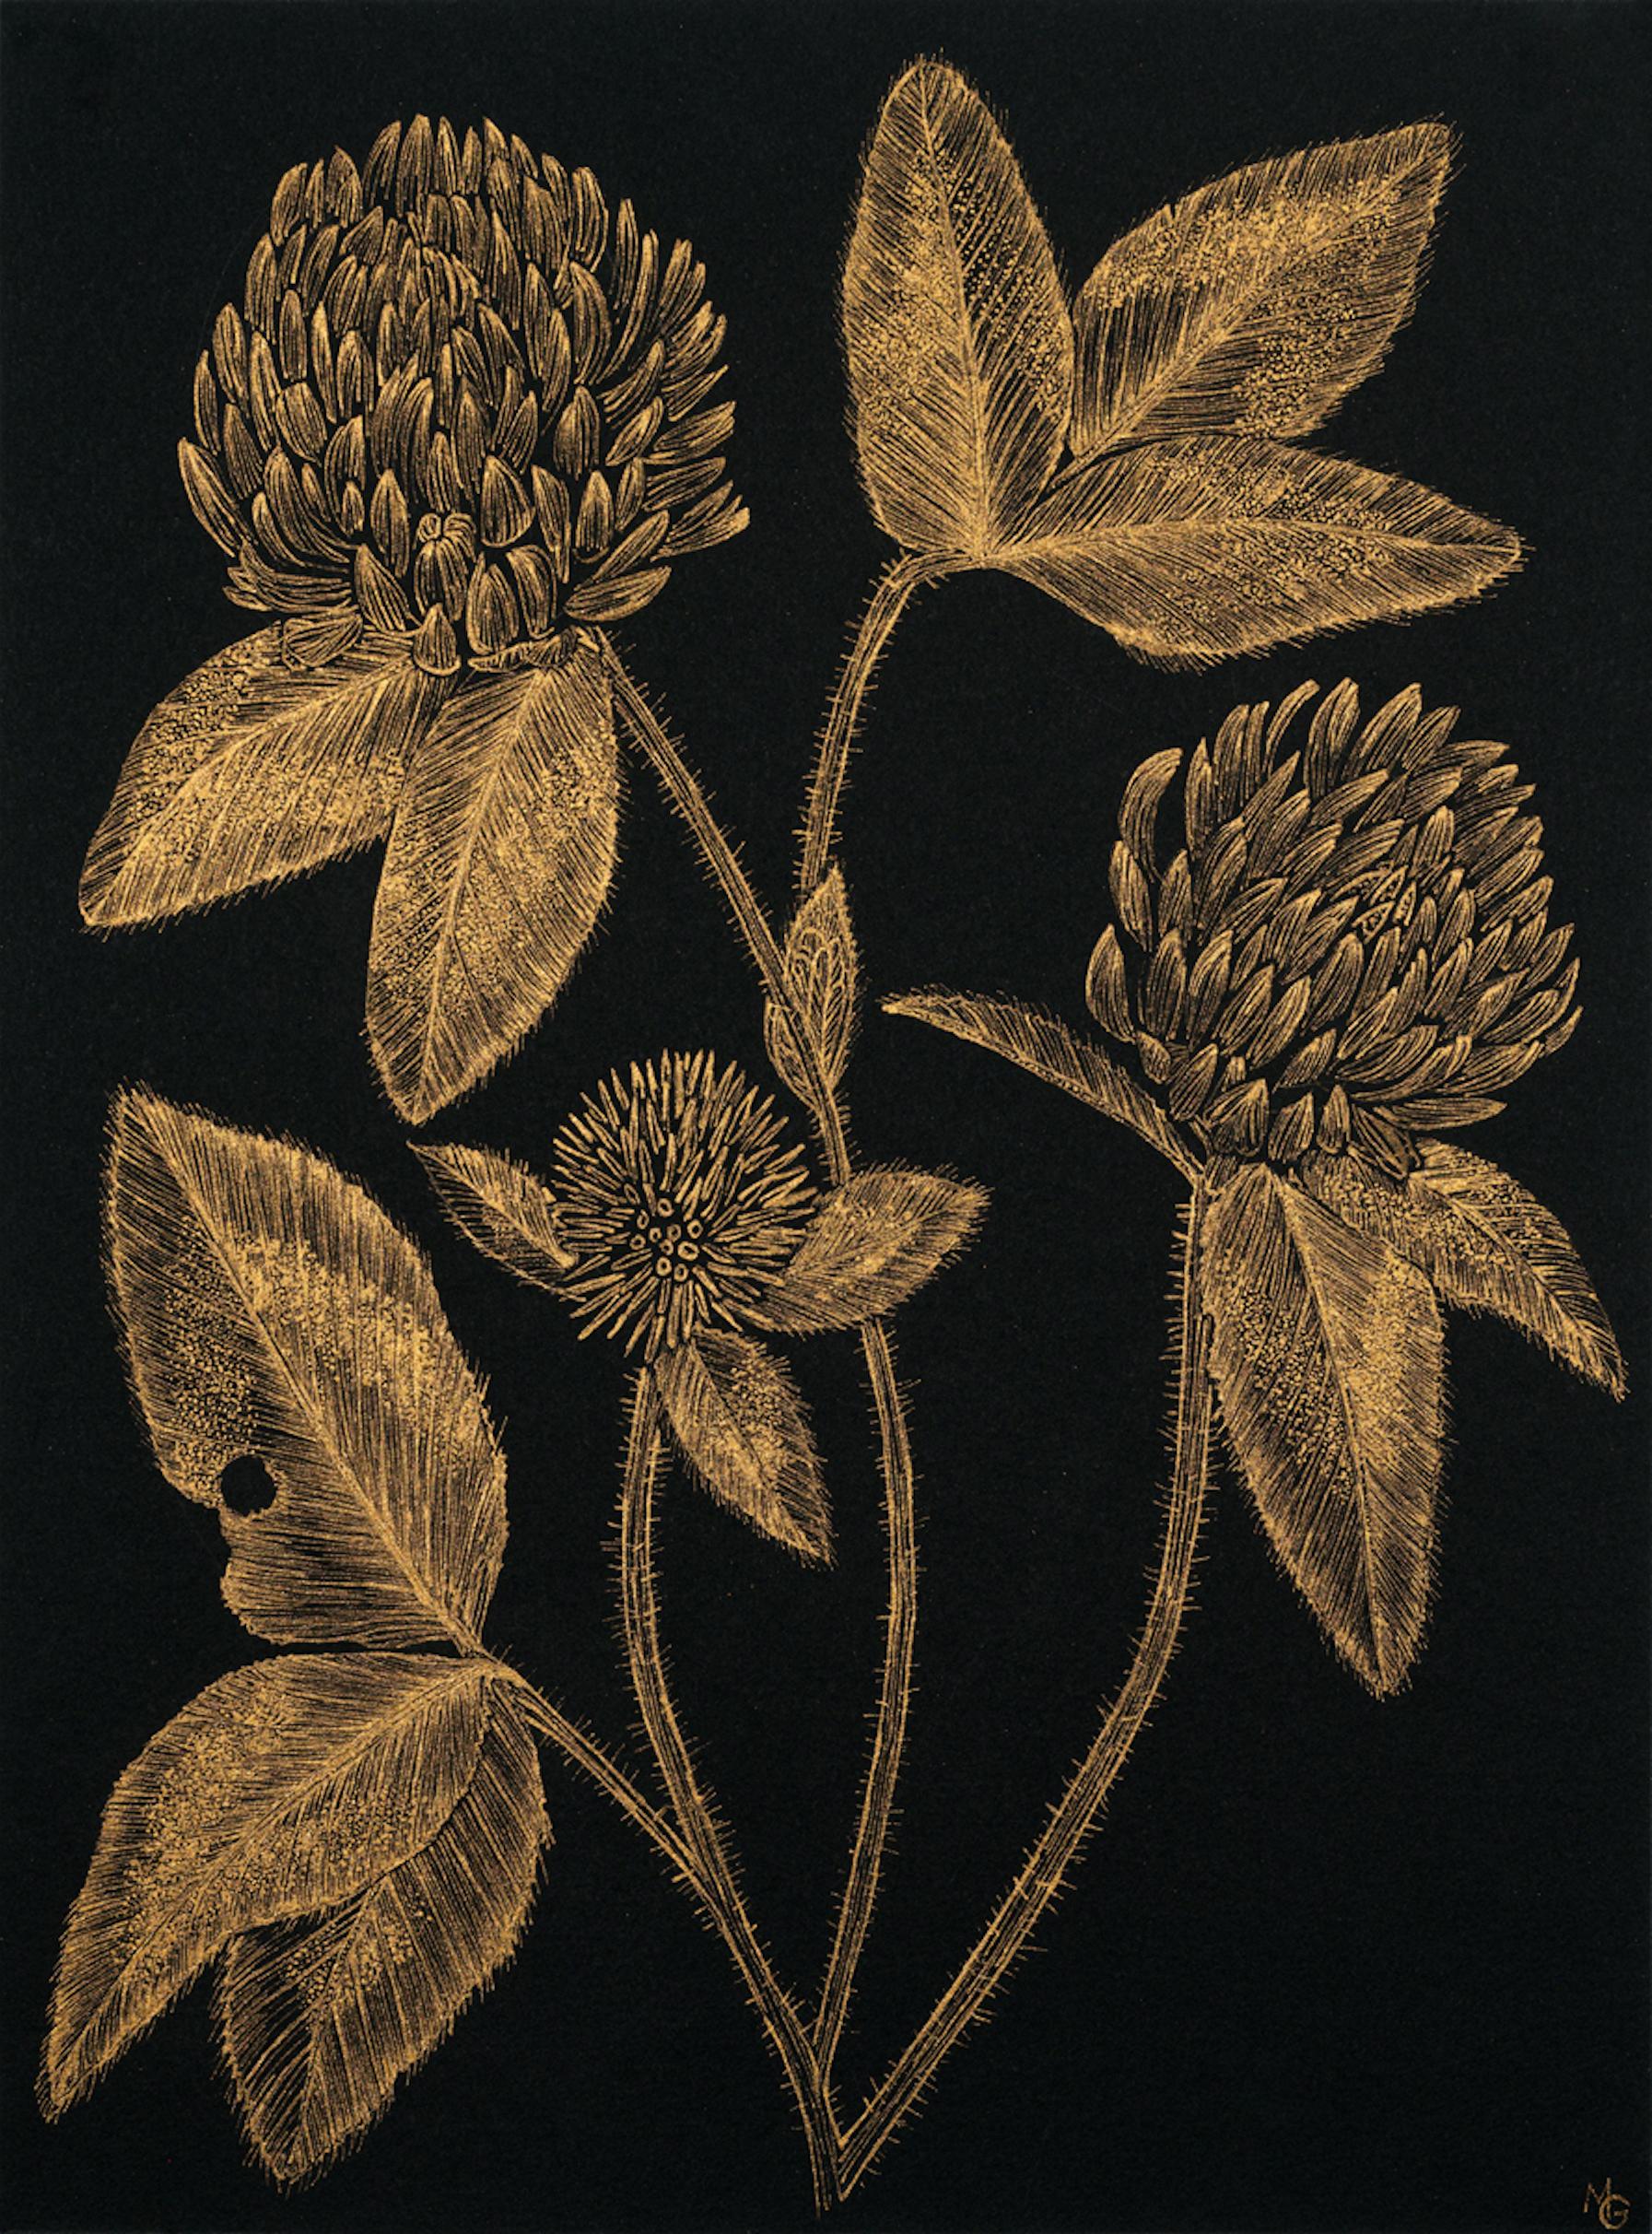 Margot Glass Still-Life - Red Clover #3, gold ink and black botanical still life drawing, 2020